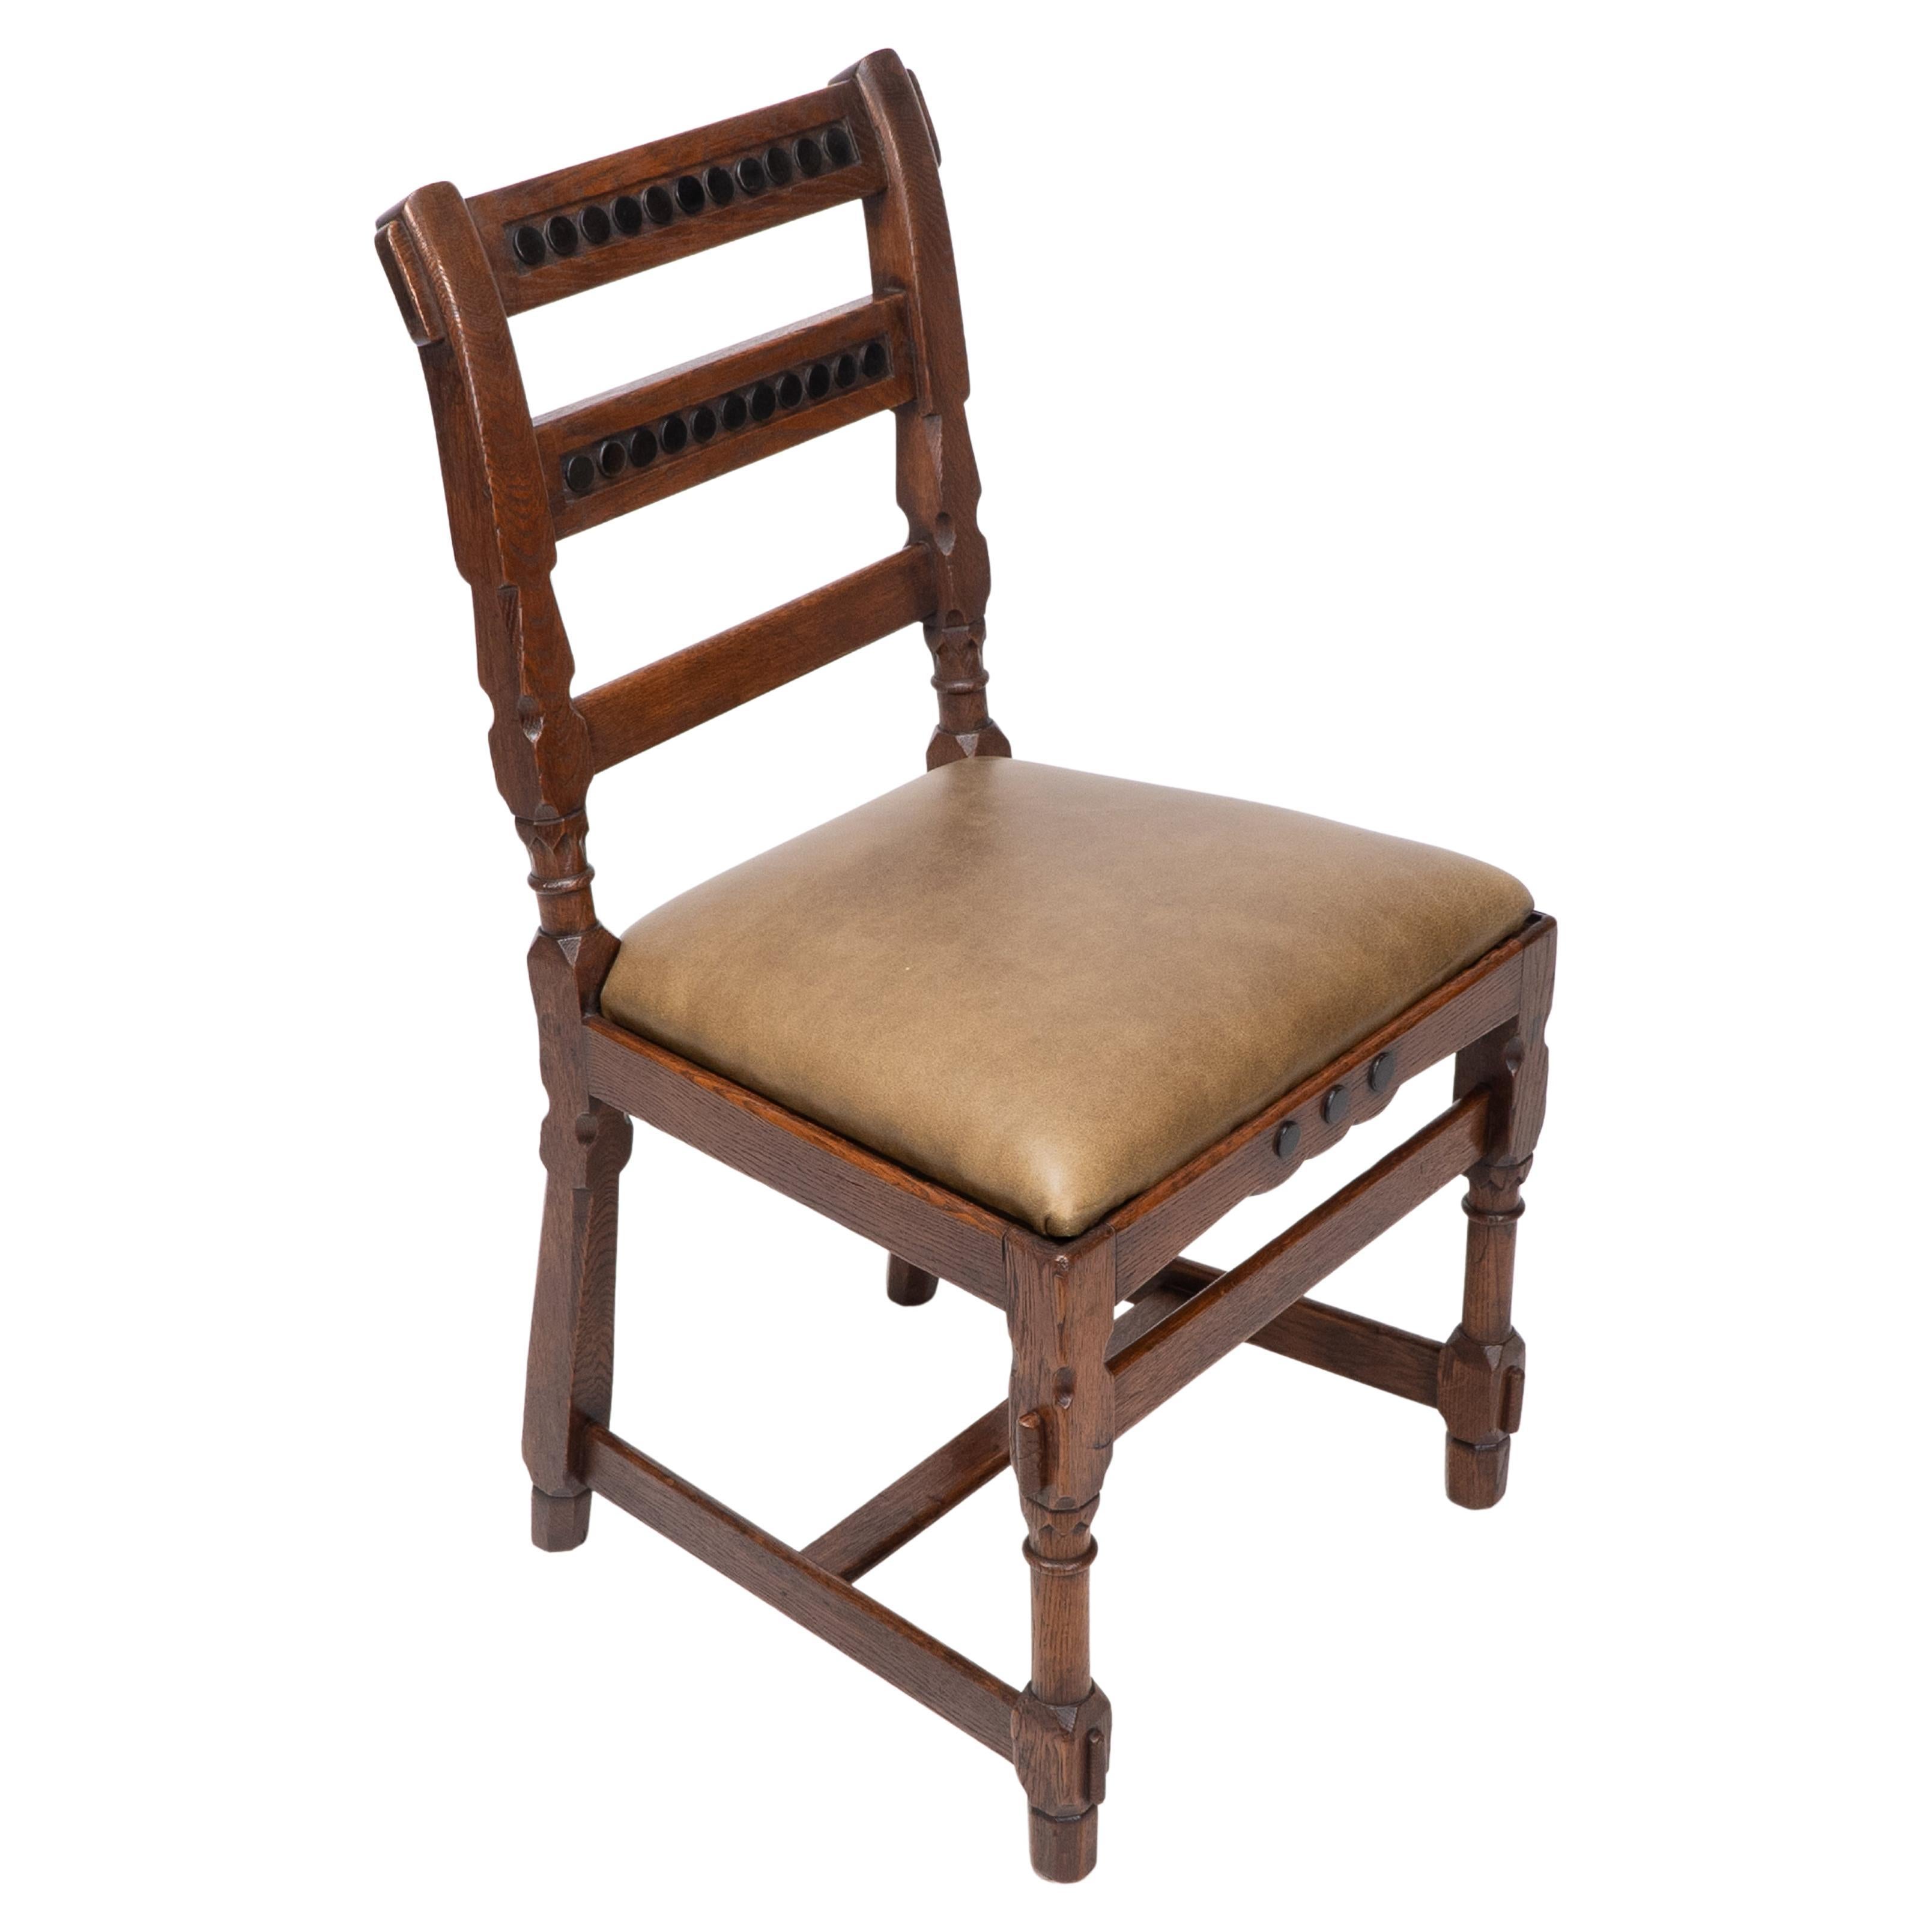 J P Seddon attri. An Aesthetic Movement oak side chair with ebonized circles